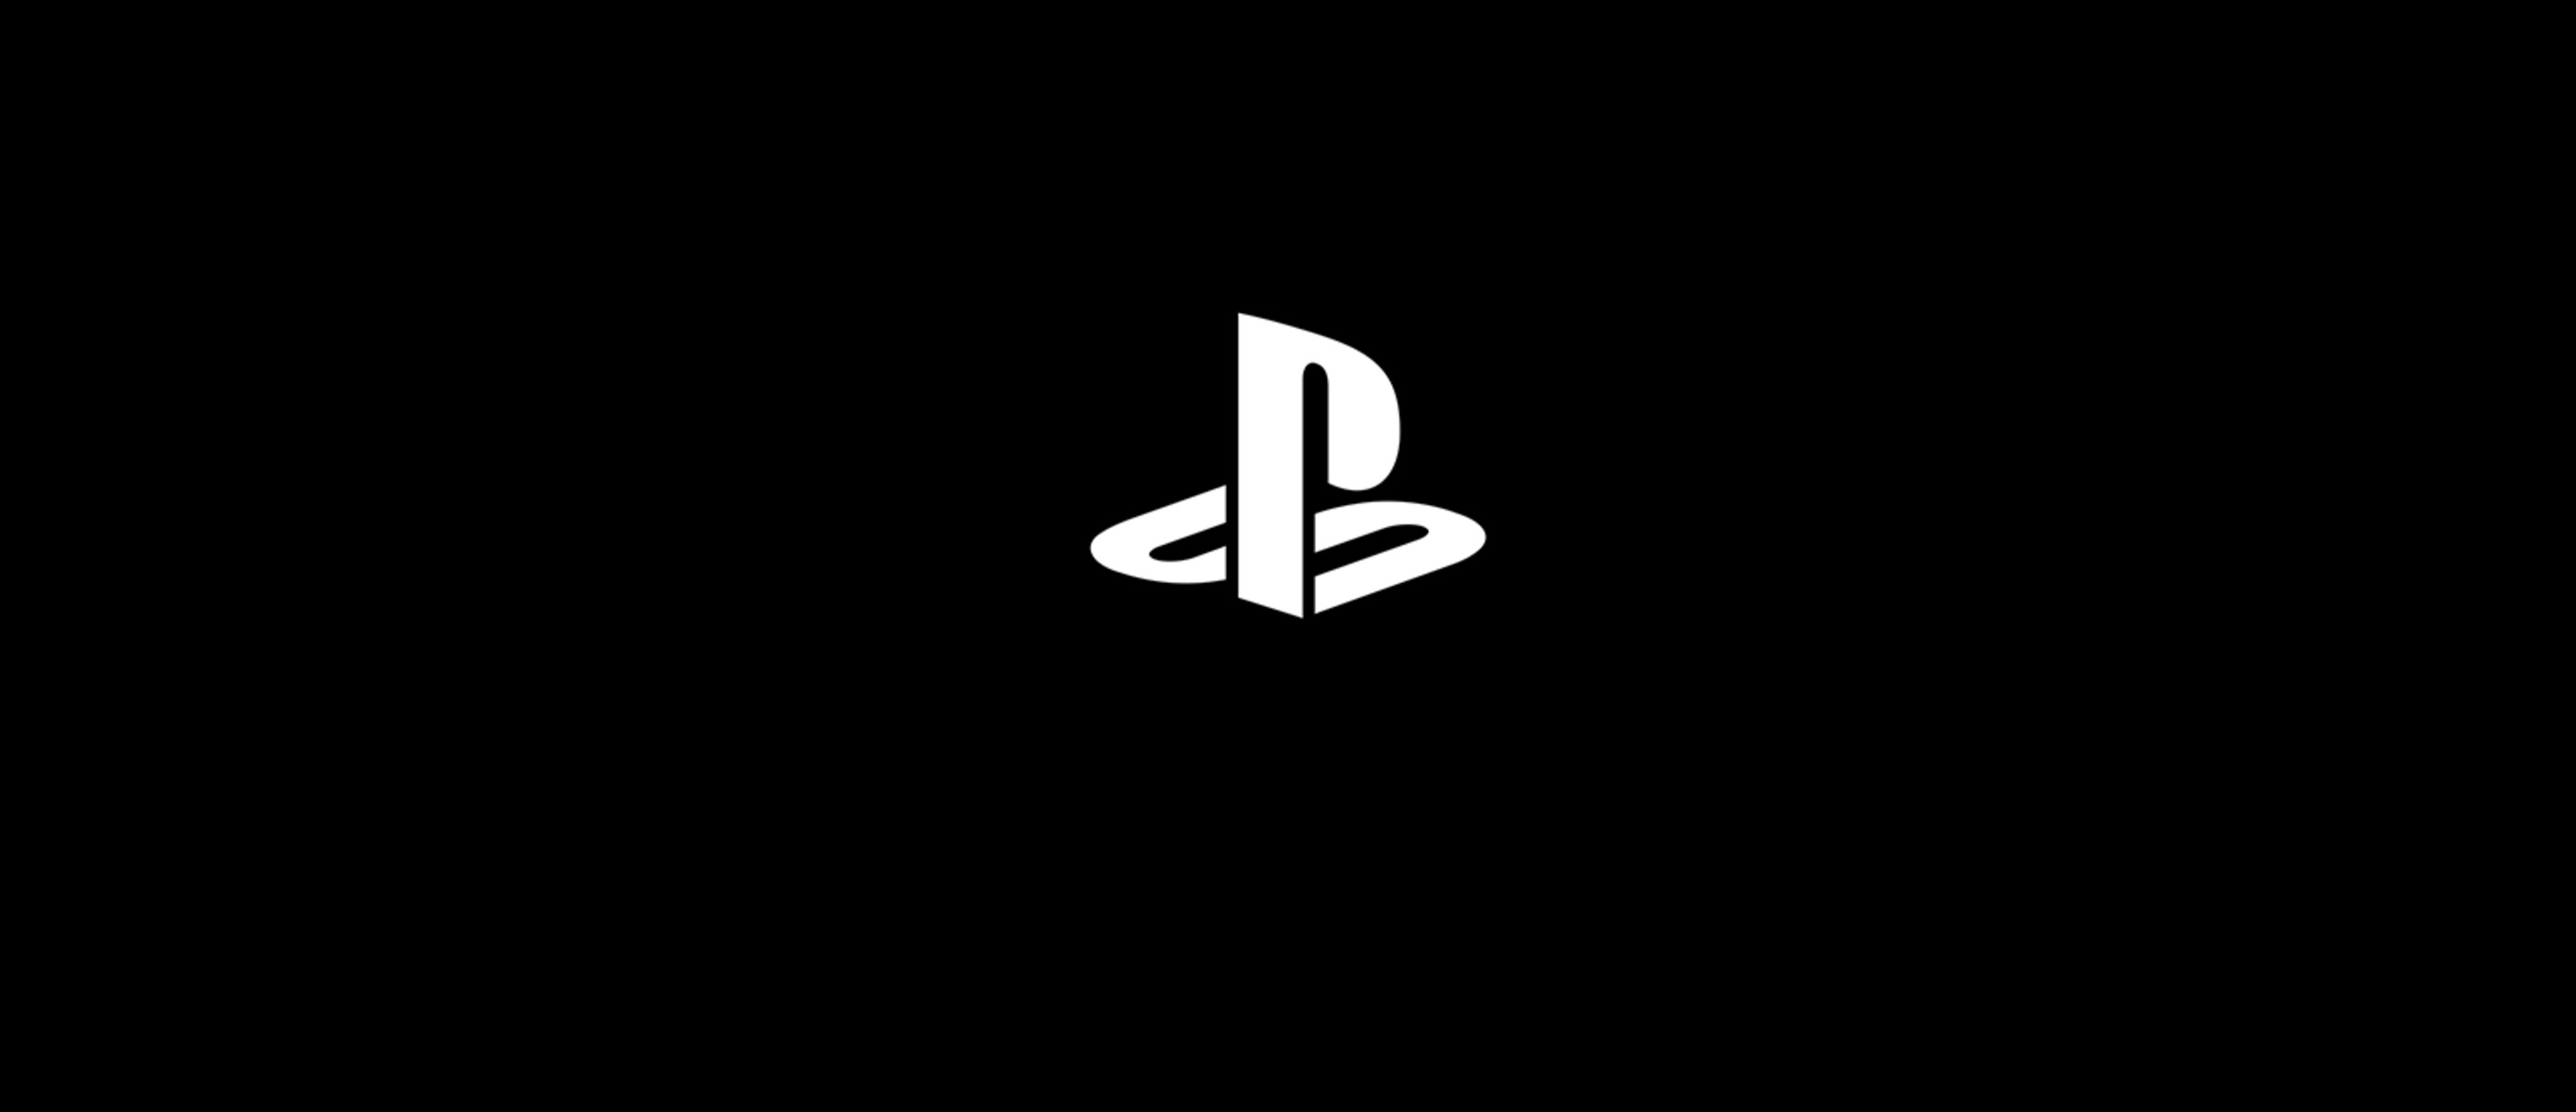 Playstation youtube. Логотип плейстейшен 4. Знак Sony PLAYSTATION. PLAYSTATION 5 логотип. PLAYSTATION надпись.